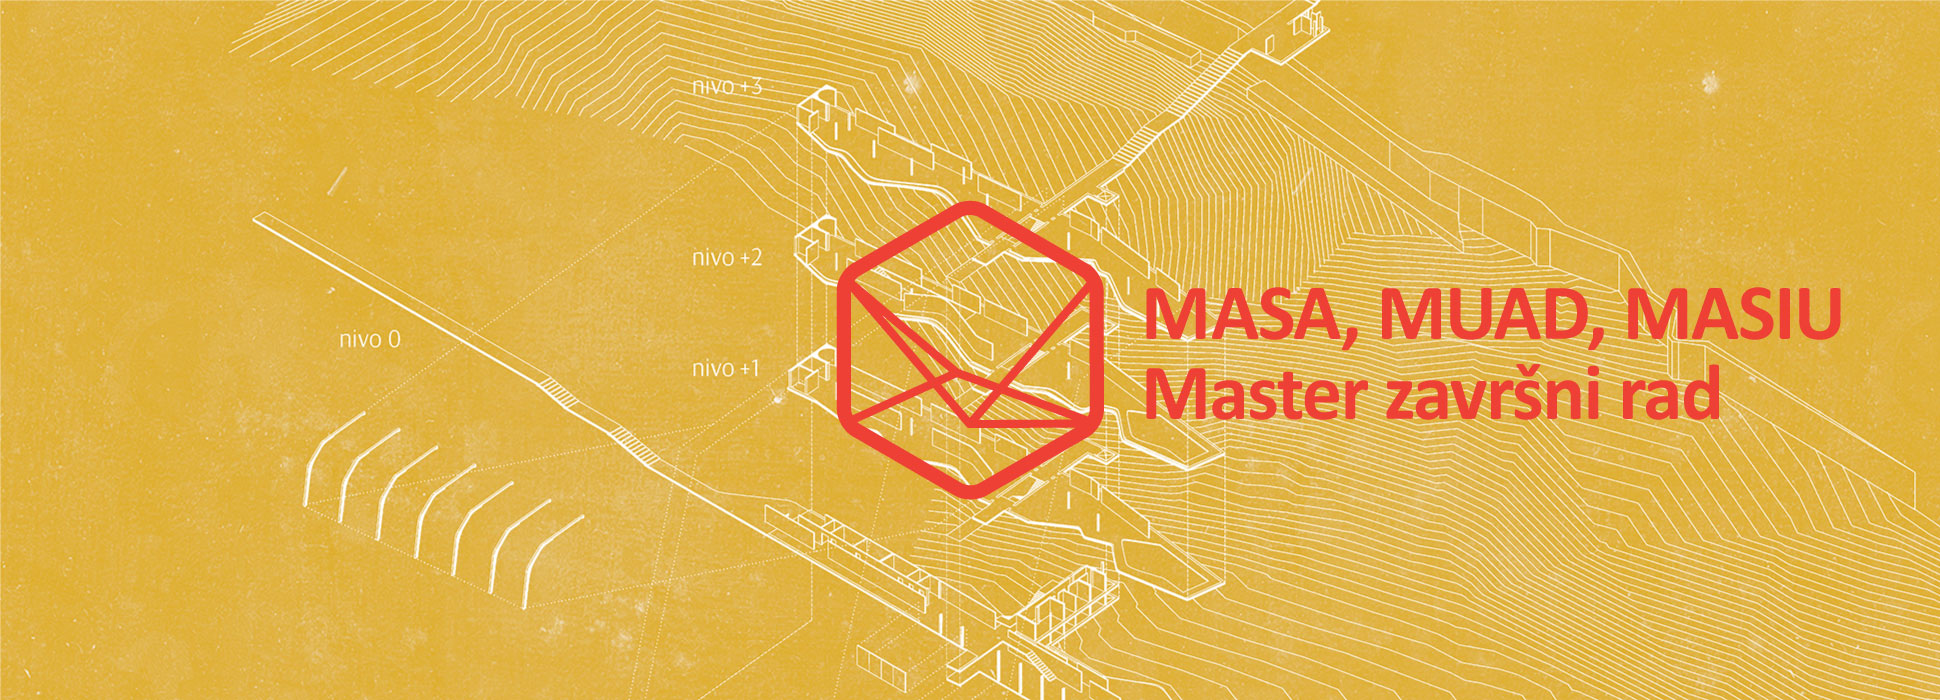 201617_MASA-MUAD-MASIU_Master-zavrsni-rad_cover